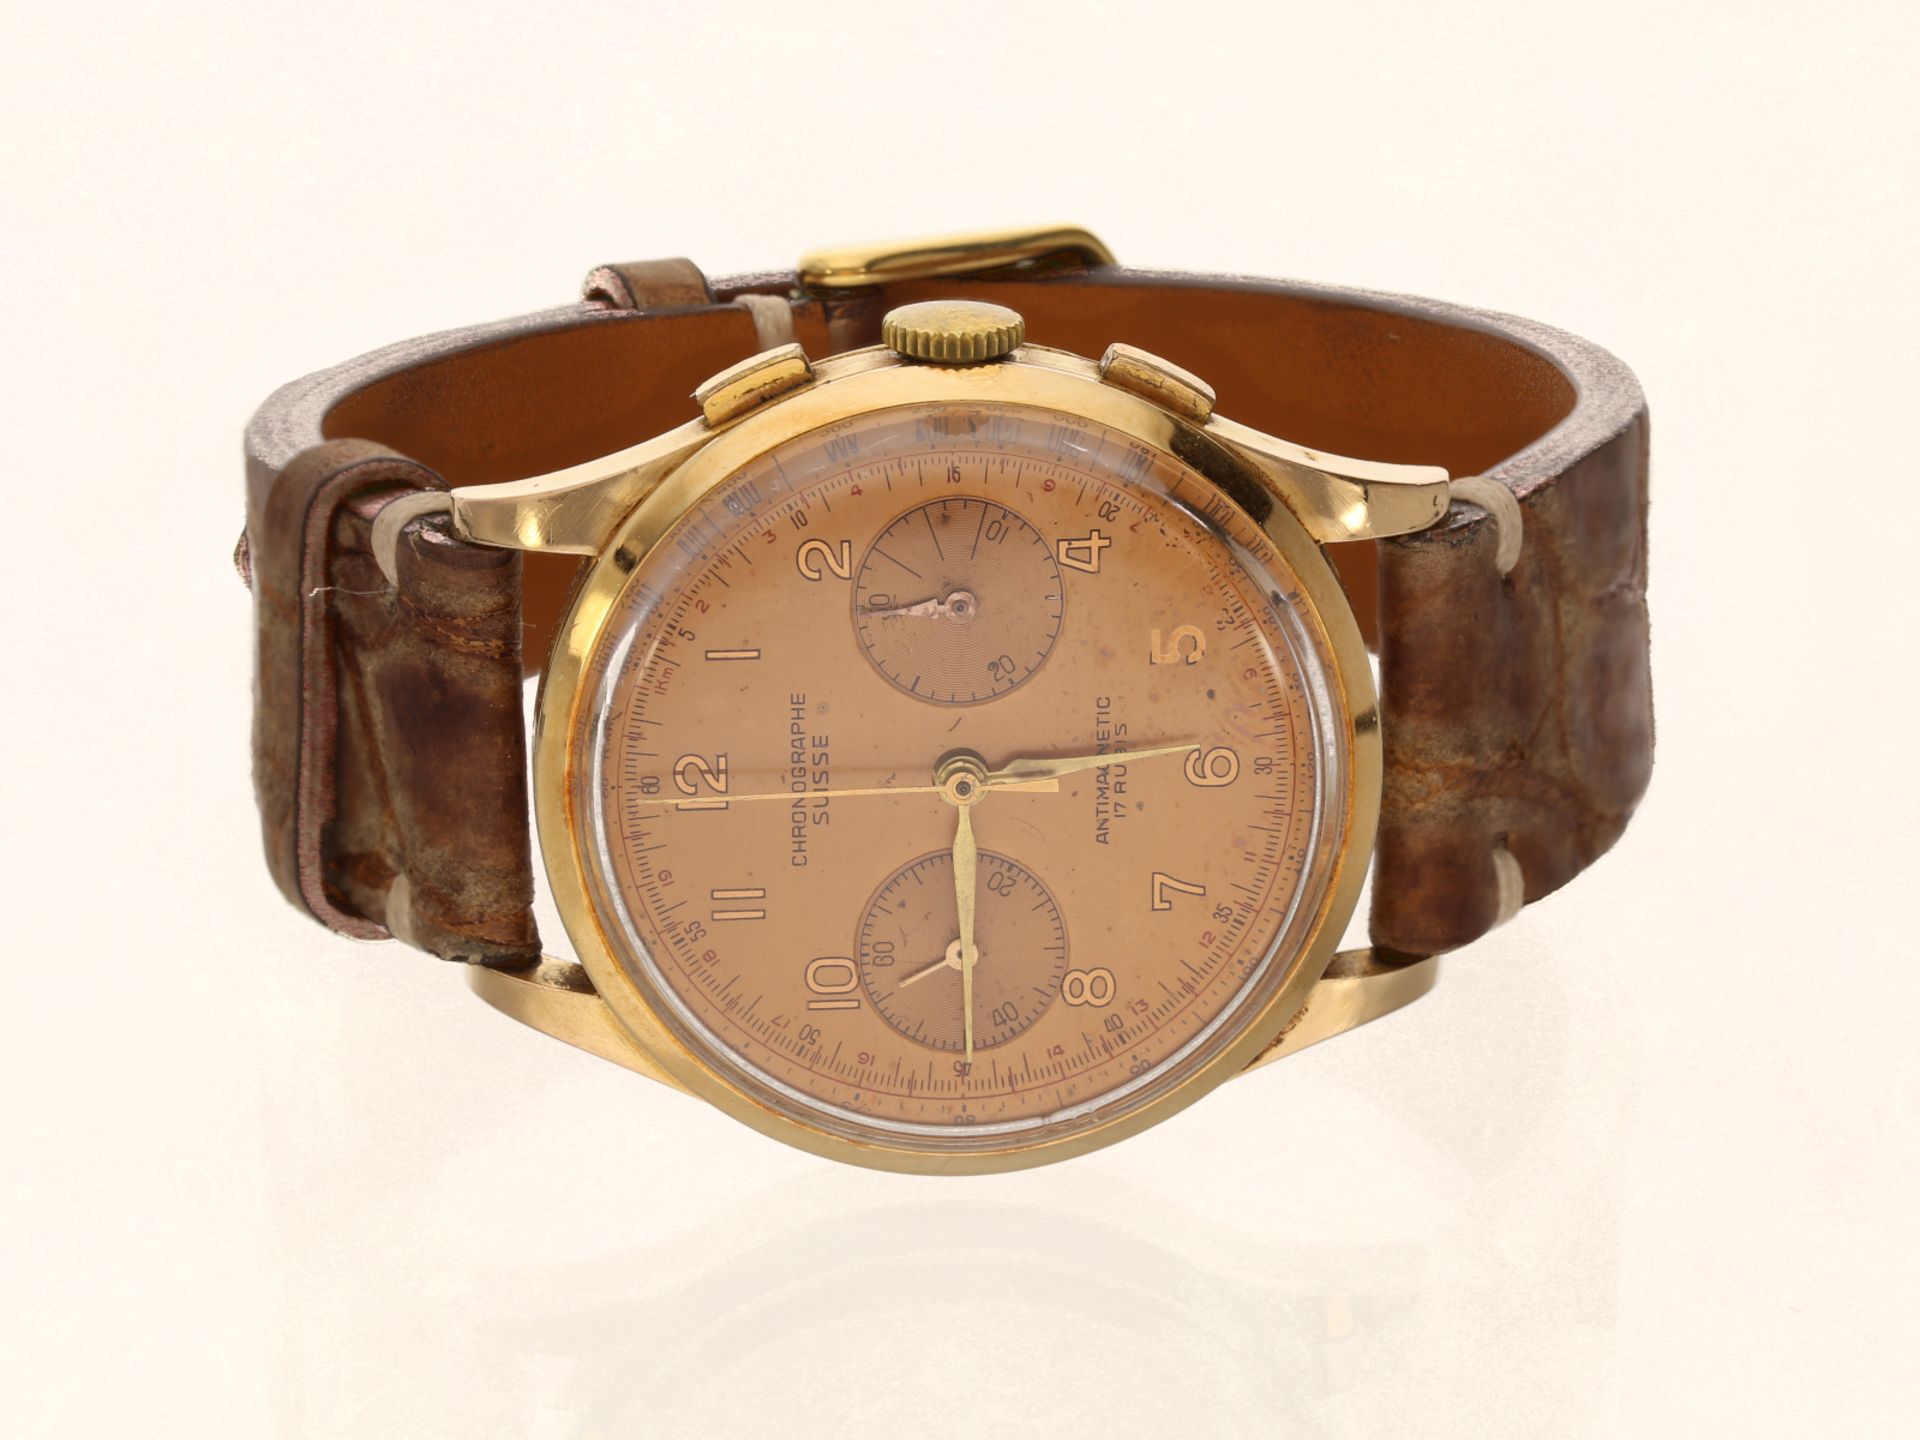 Armbanduhr: vintage overzise "Chronographe Suisse" Ref.3910 in 18K Gold, mit Box, 1950er